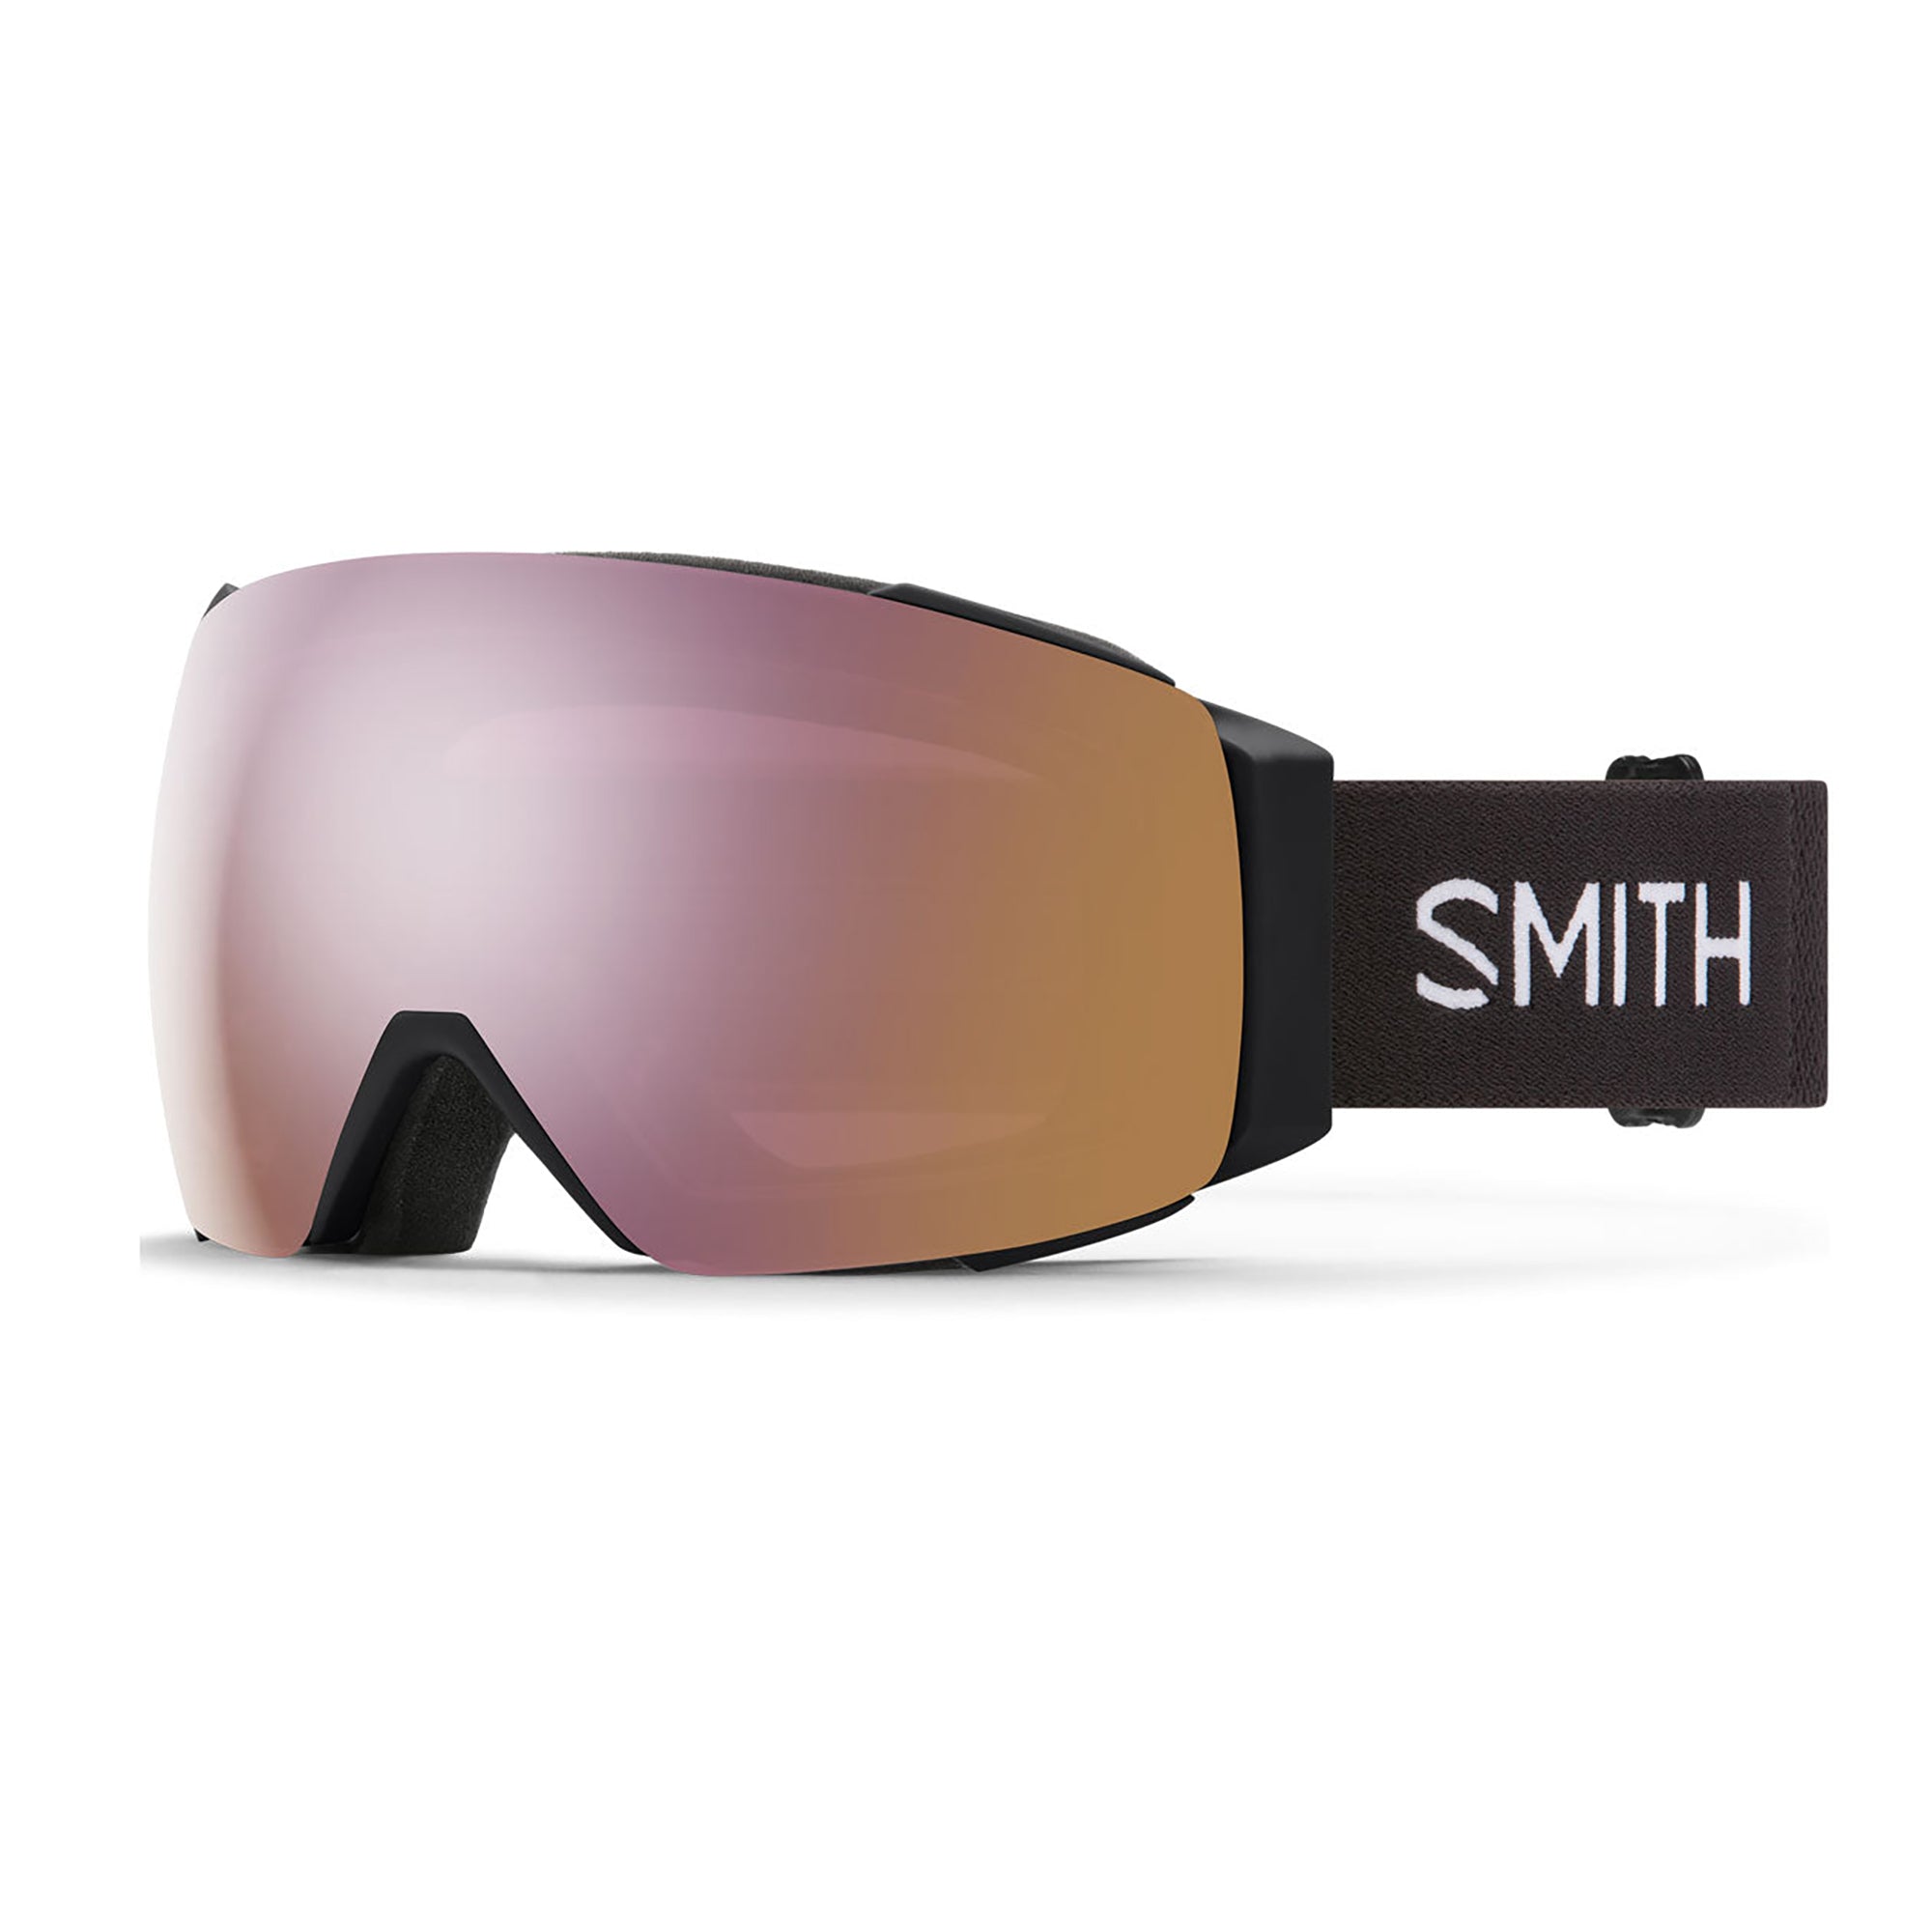 Smith I/O MAG Snow Goggles - Fresh Skis